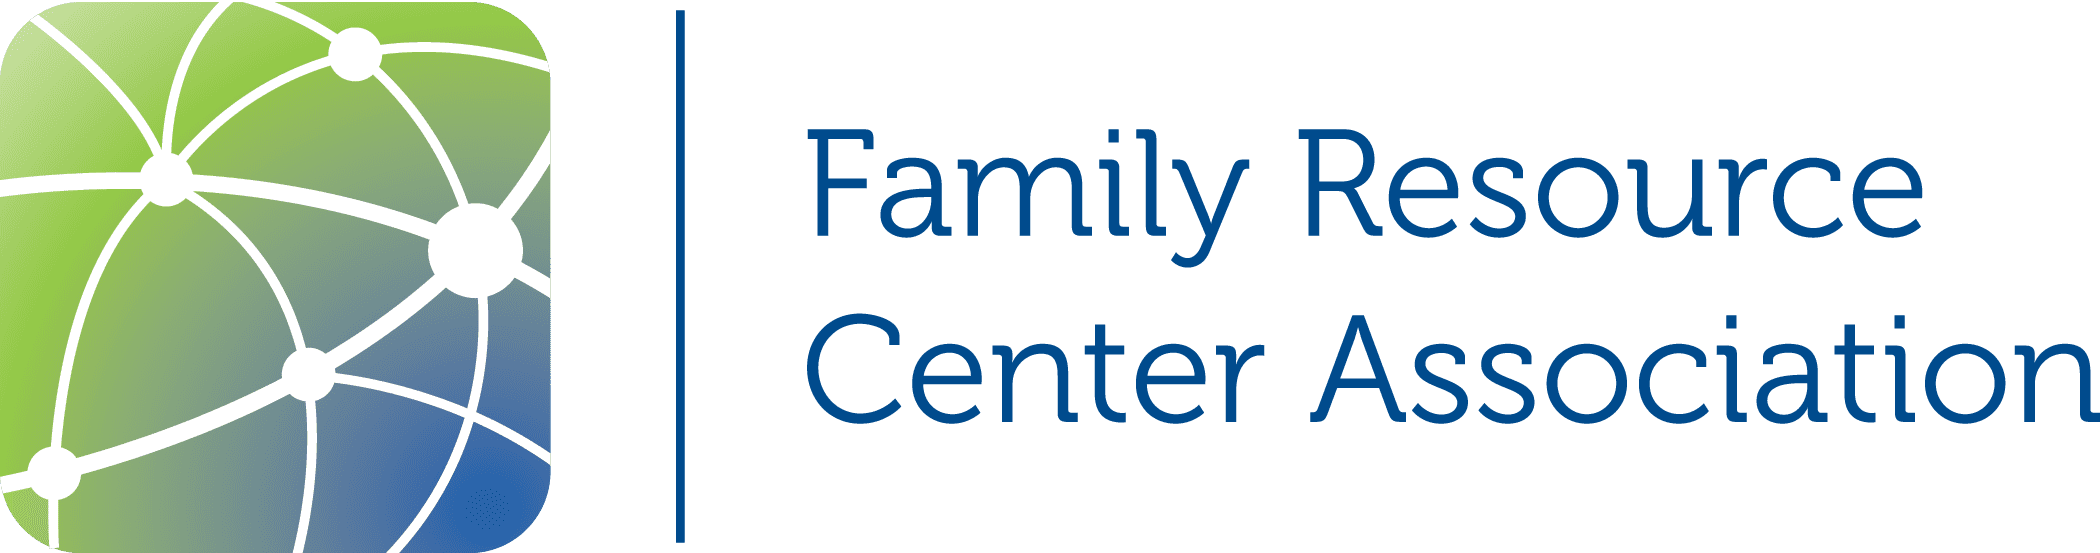 Family Resource Center Association